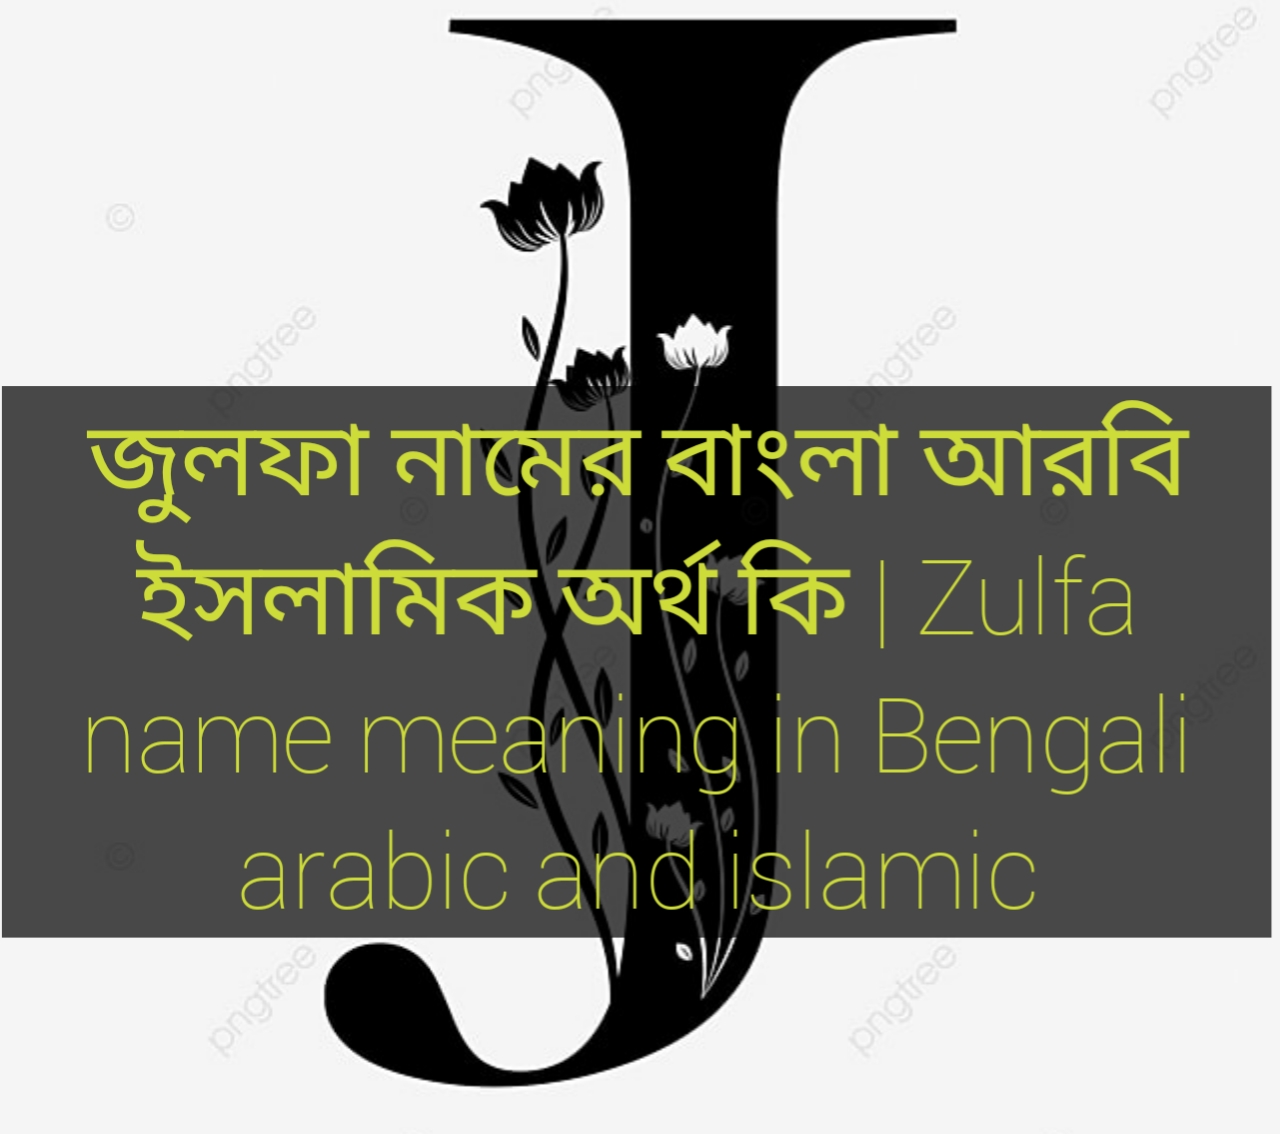 zulfa name meaning in Bengali, জুলফা নামের অর্থ কি, জুলফা নামের বাংলা অর্থ কি, জুলফা নামের ইসলামিক অর্থ কি,